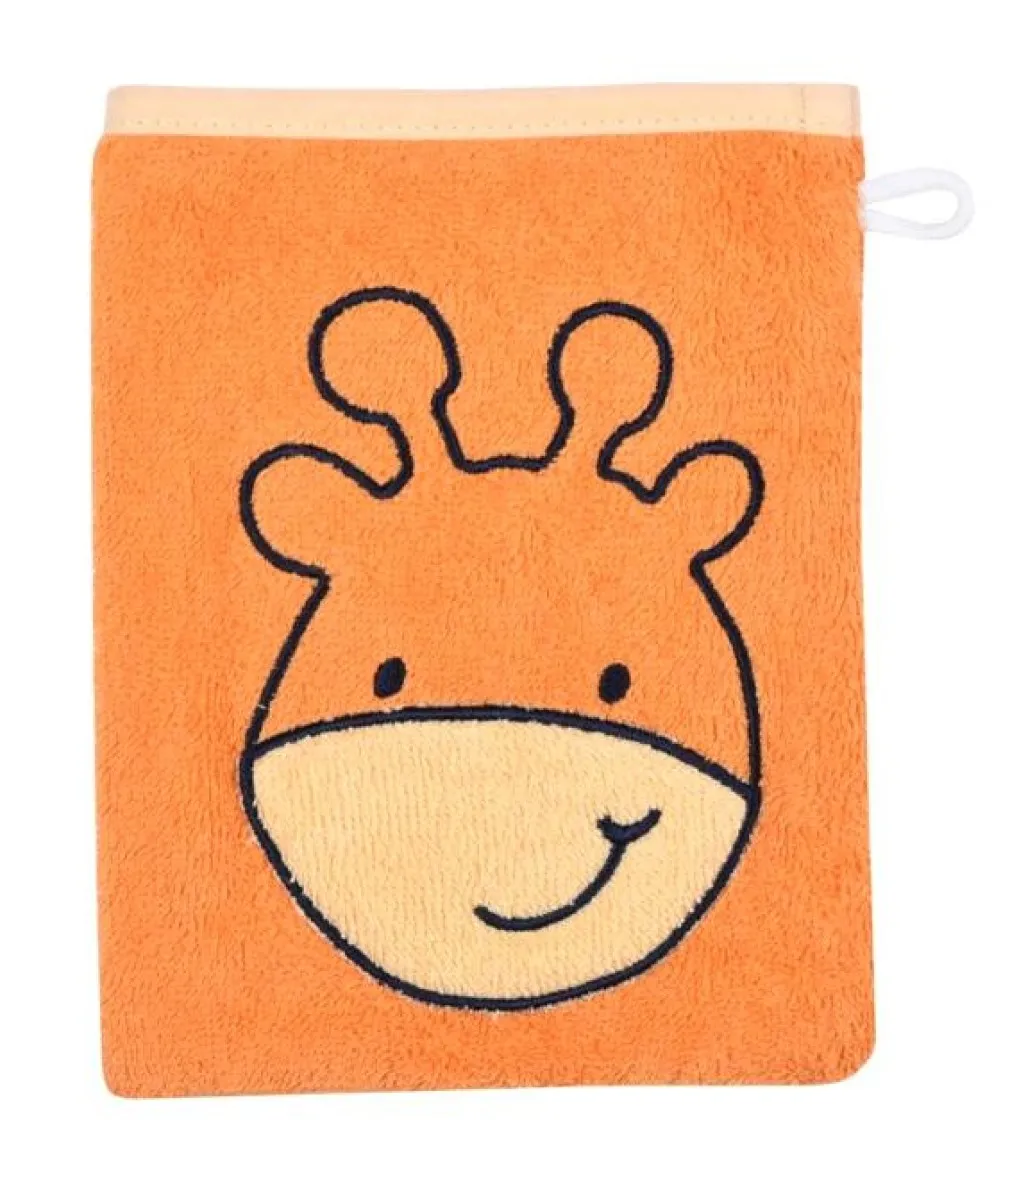 gant de toilette du tissu éponge avec motif girafe